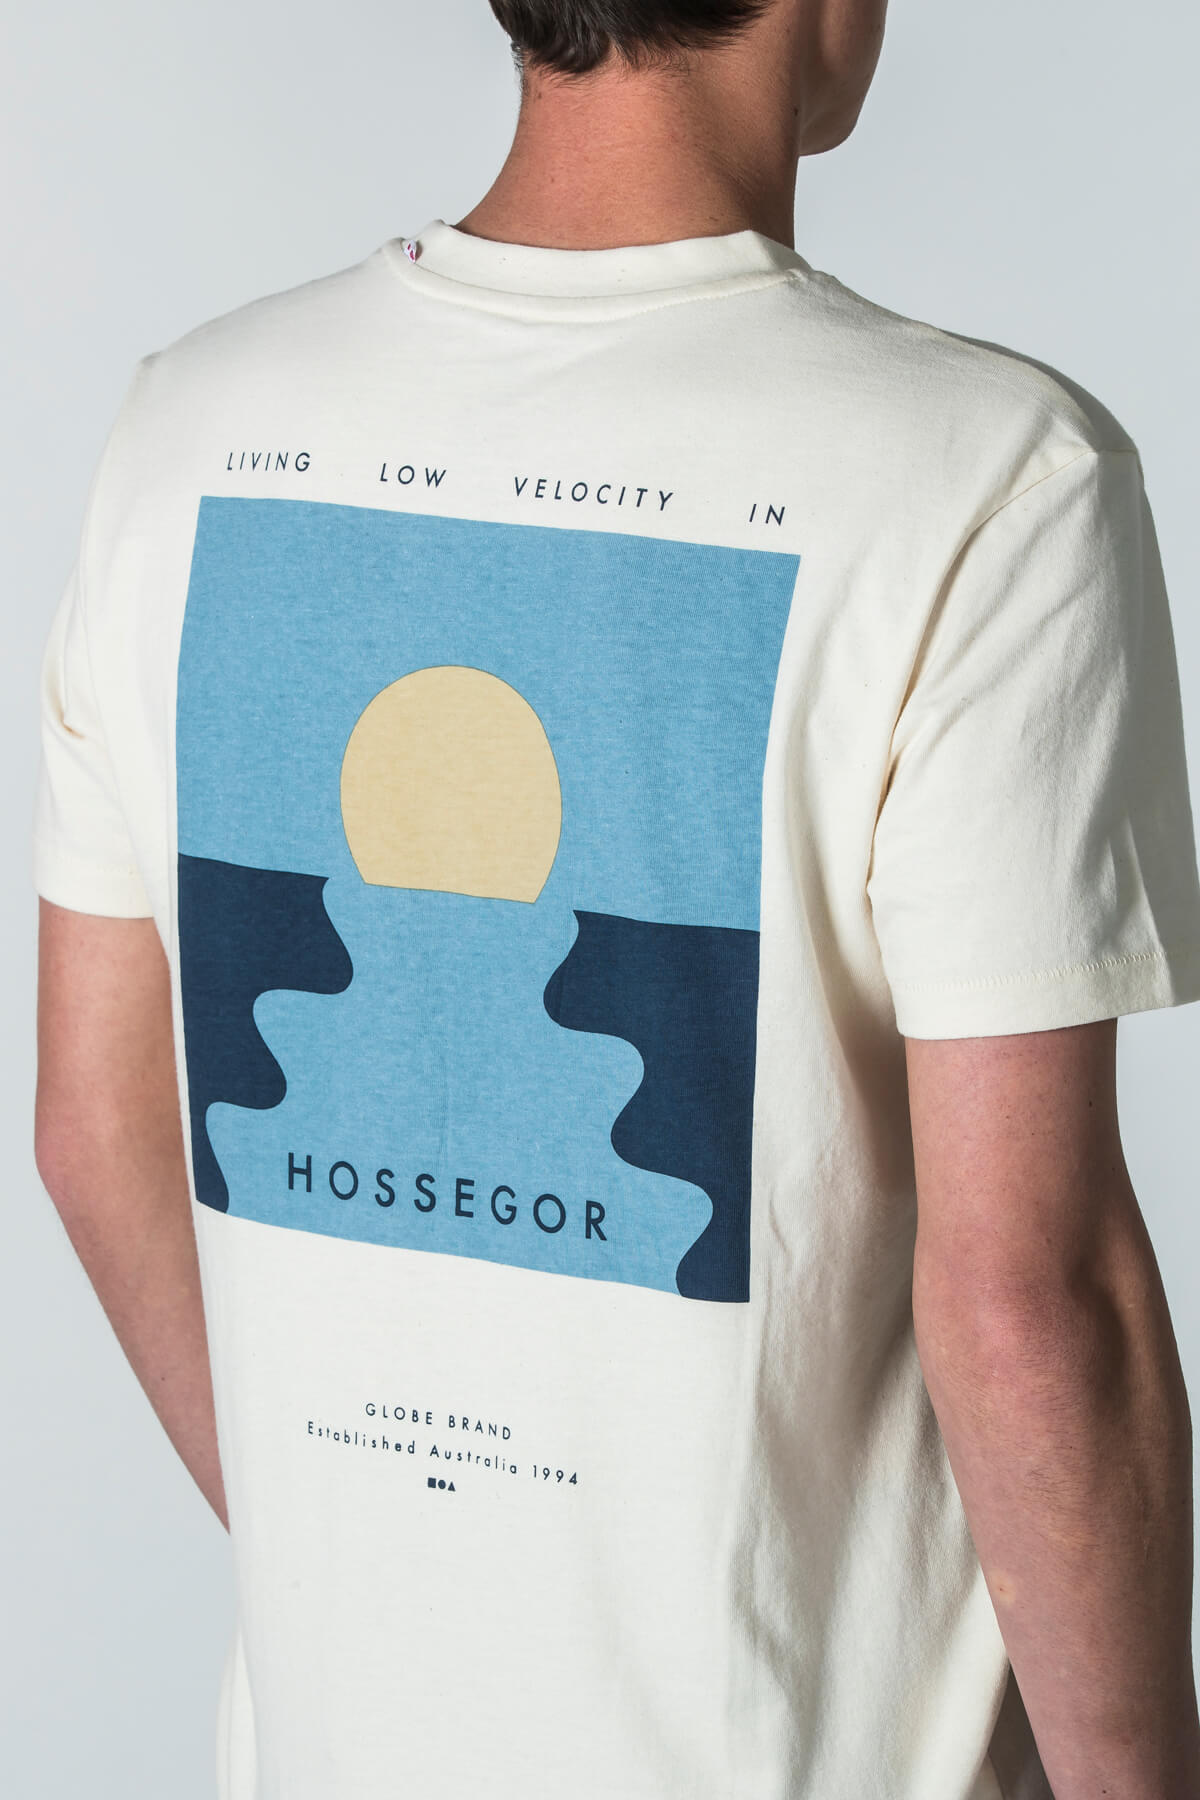 Tee-shirt Hossegor - Bleach Free-Dye Free